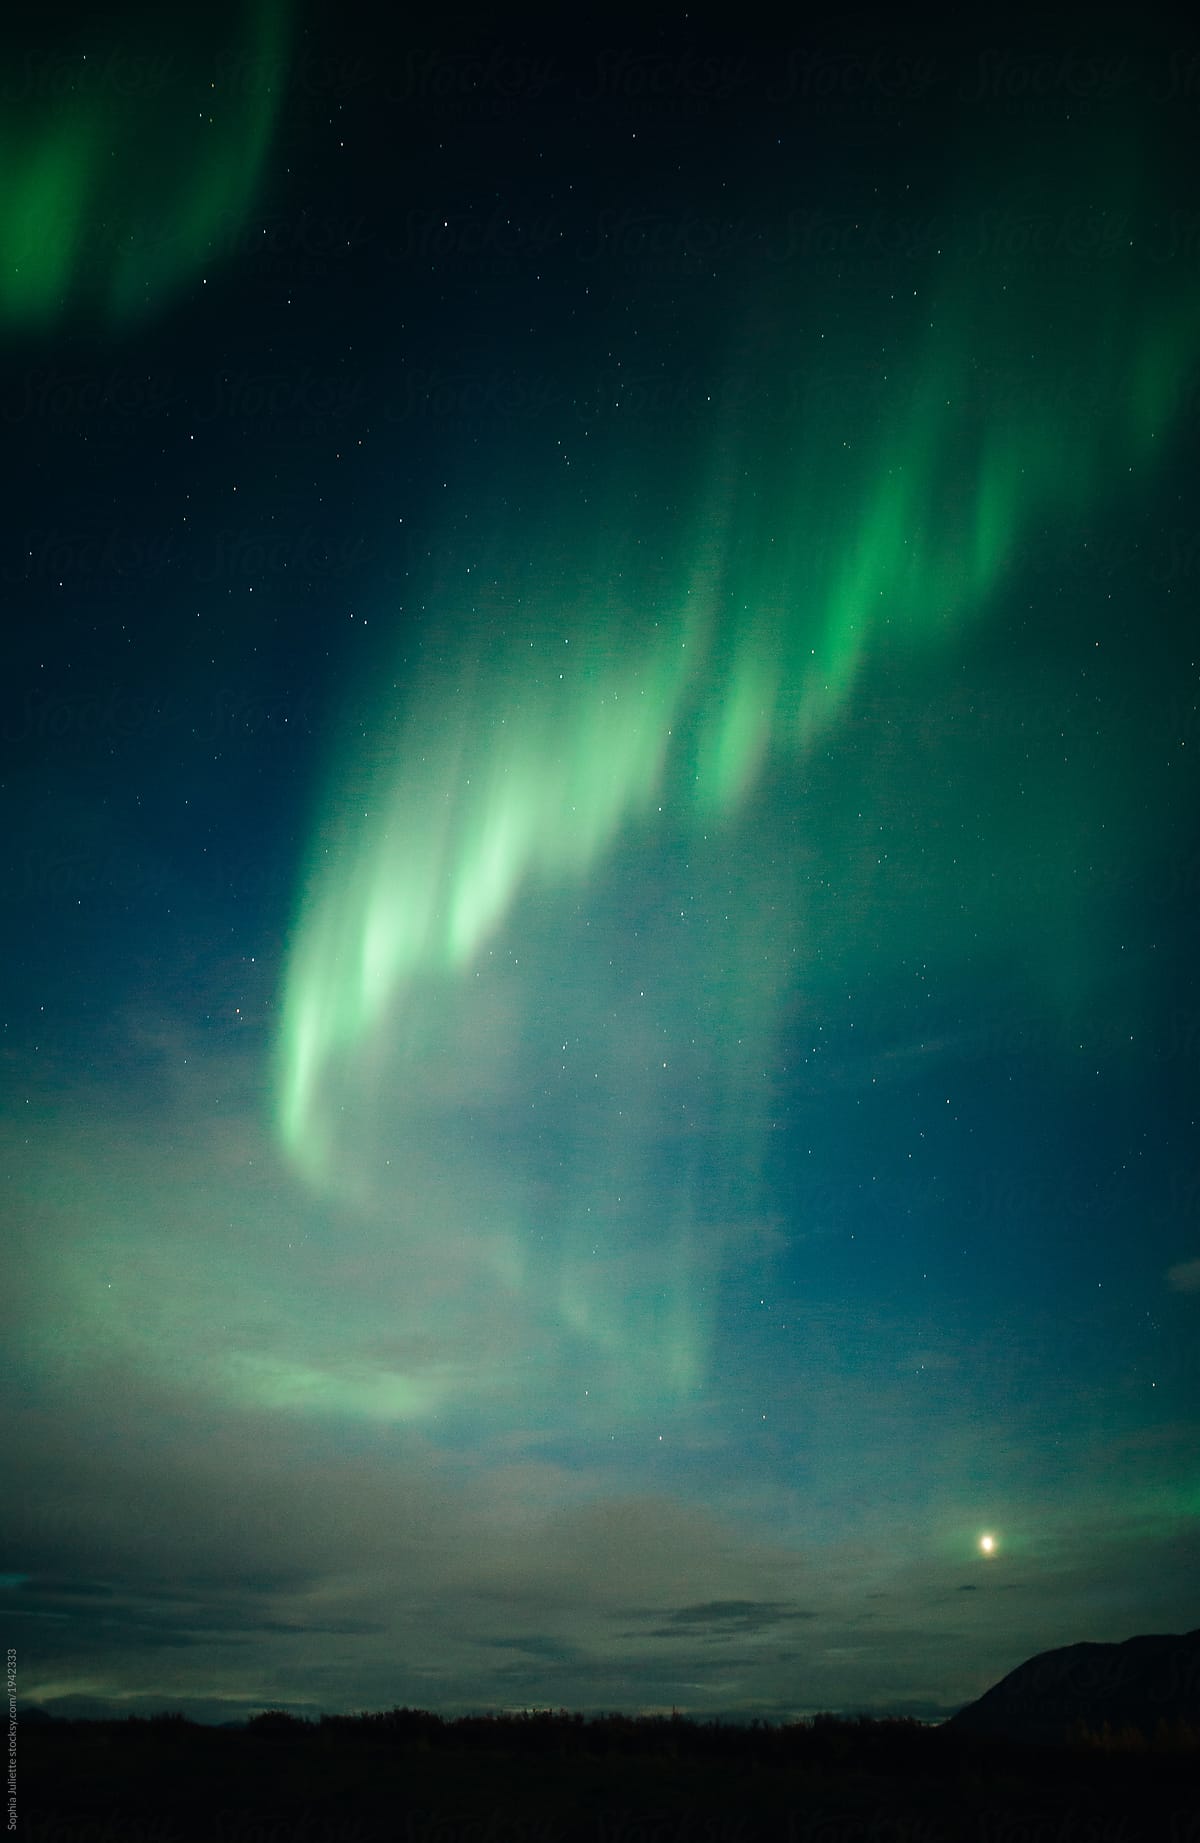 Vivid Aurora Borealis Shooting Through A Starry Night Sky In Alaska By Sophia Juliette Aurora Borealis Northern Lights Stocksy United